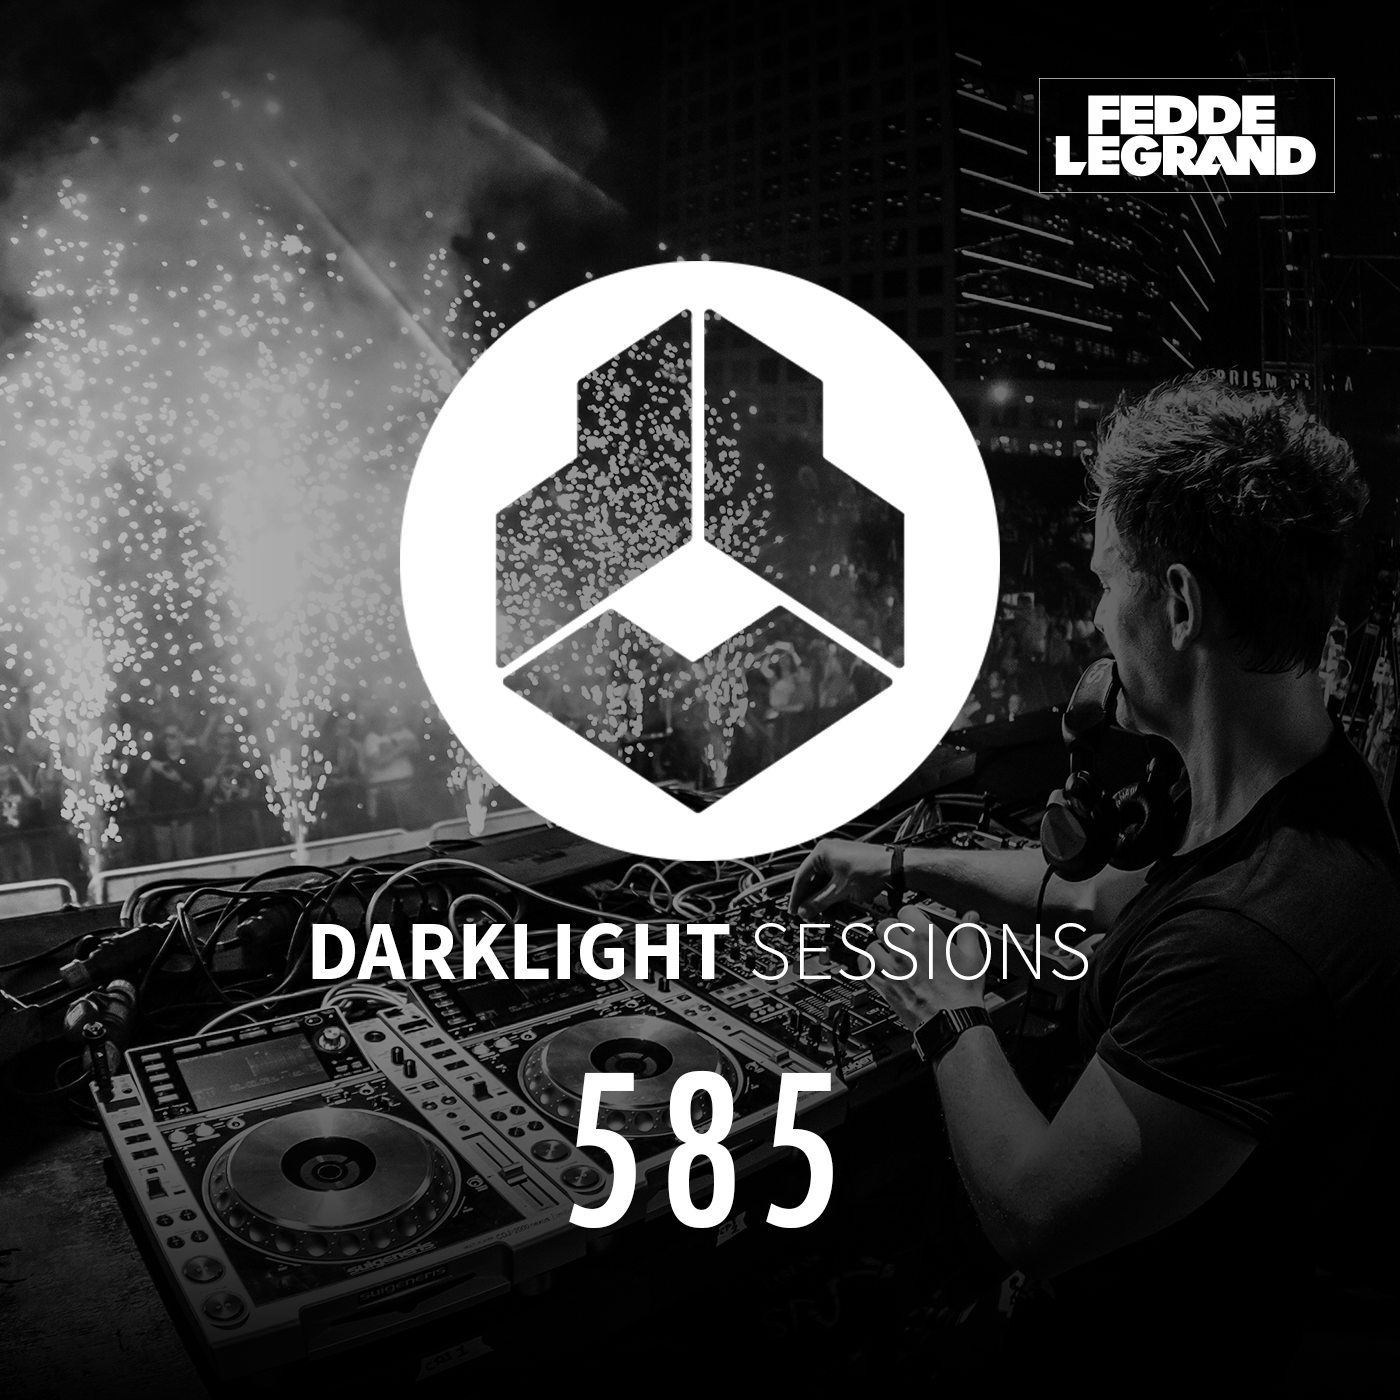 Darklight Sessions 585